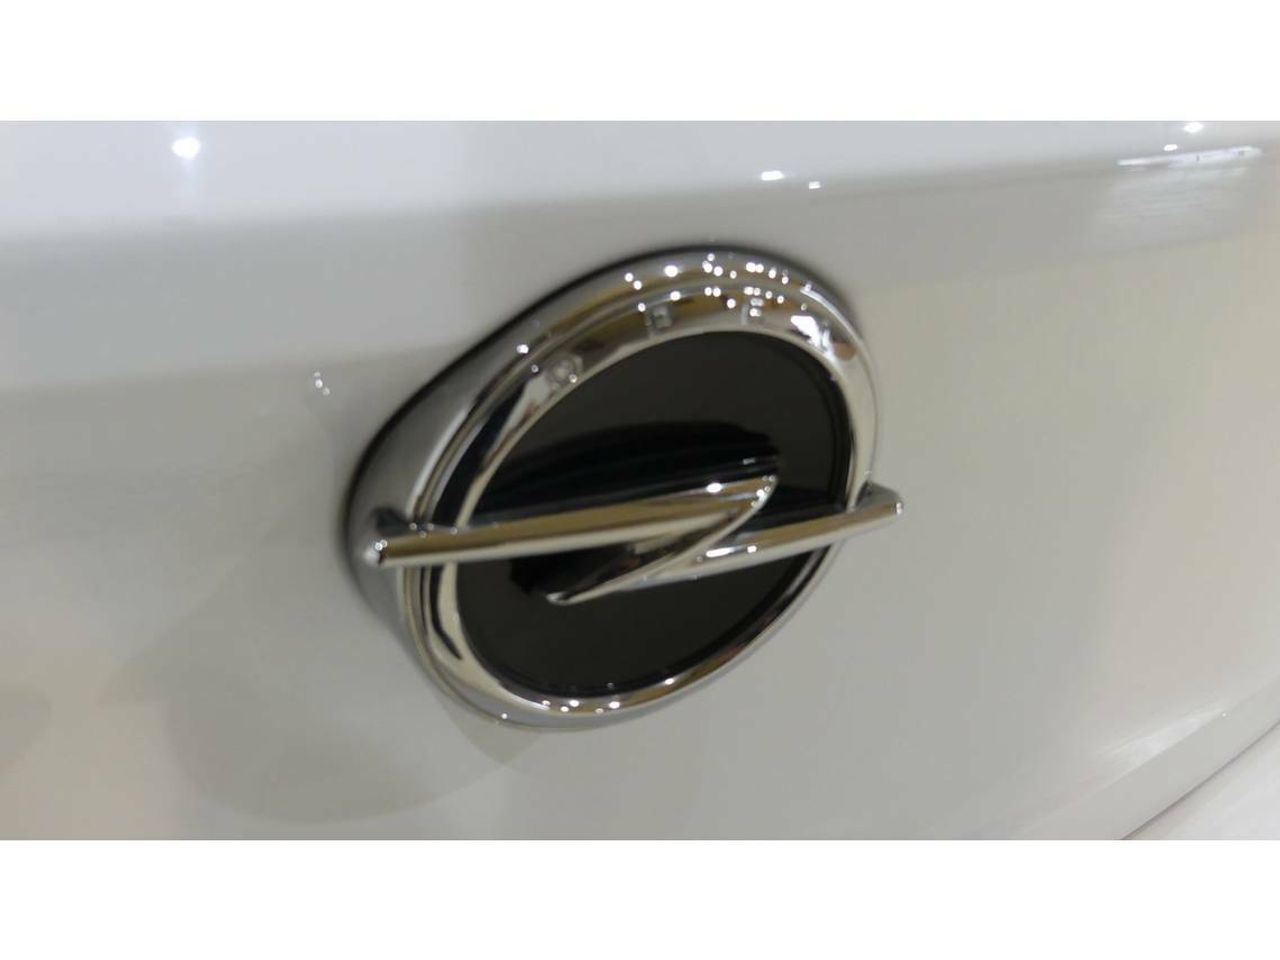 Opel Corsa Edition 1.2 XEL 55kW (75CV)  - Foto 2